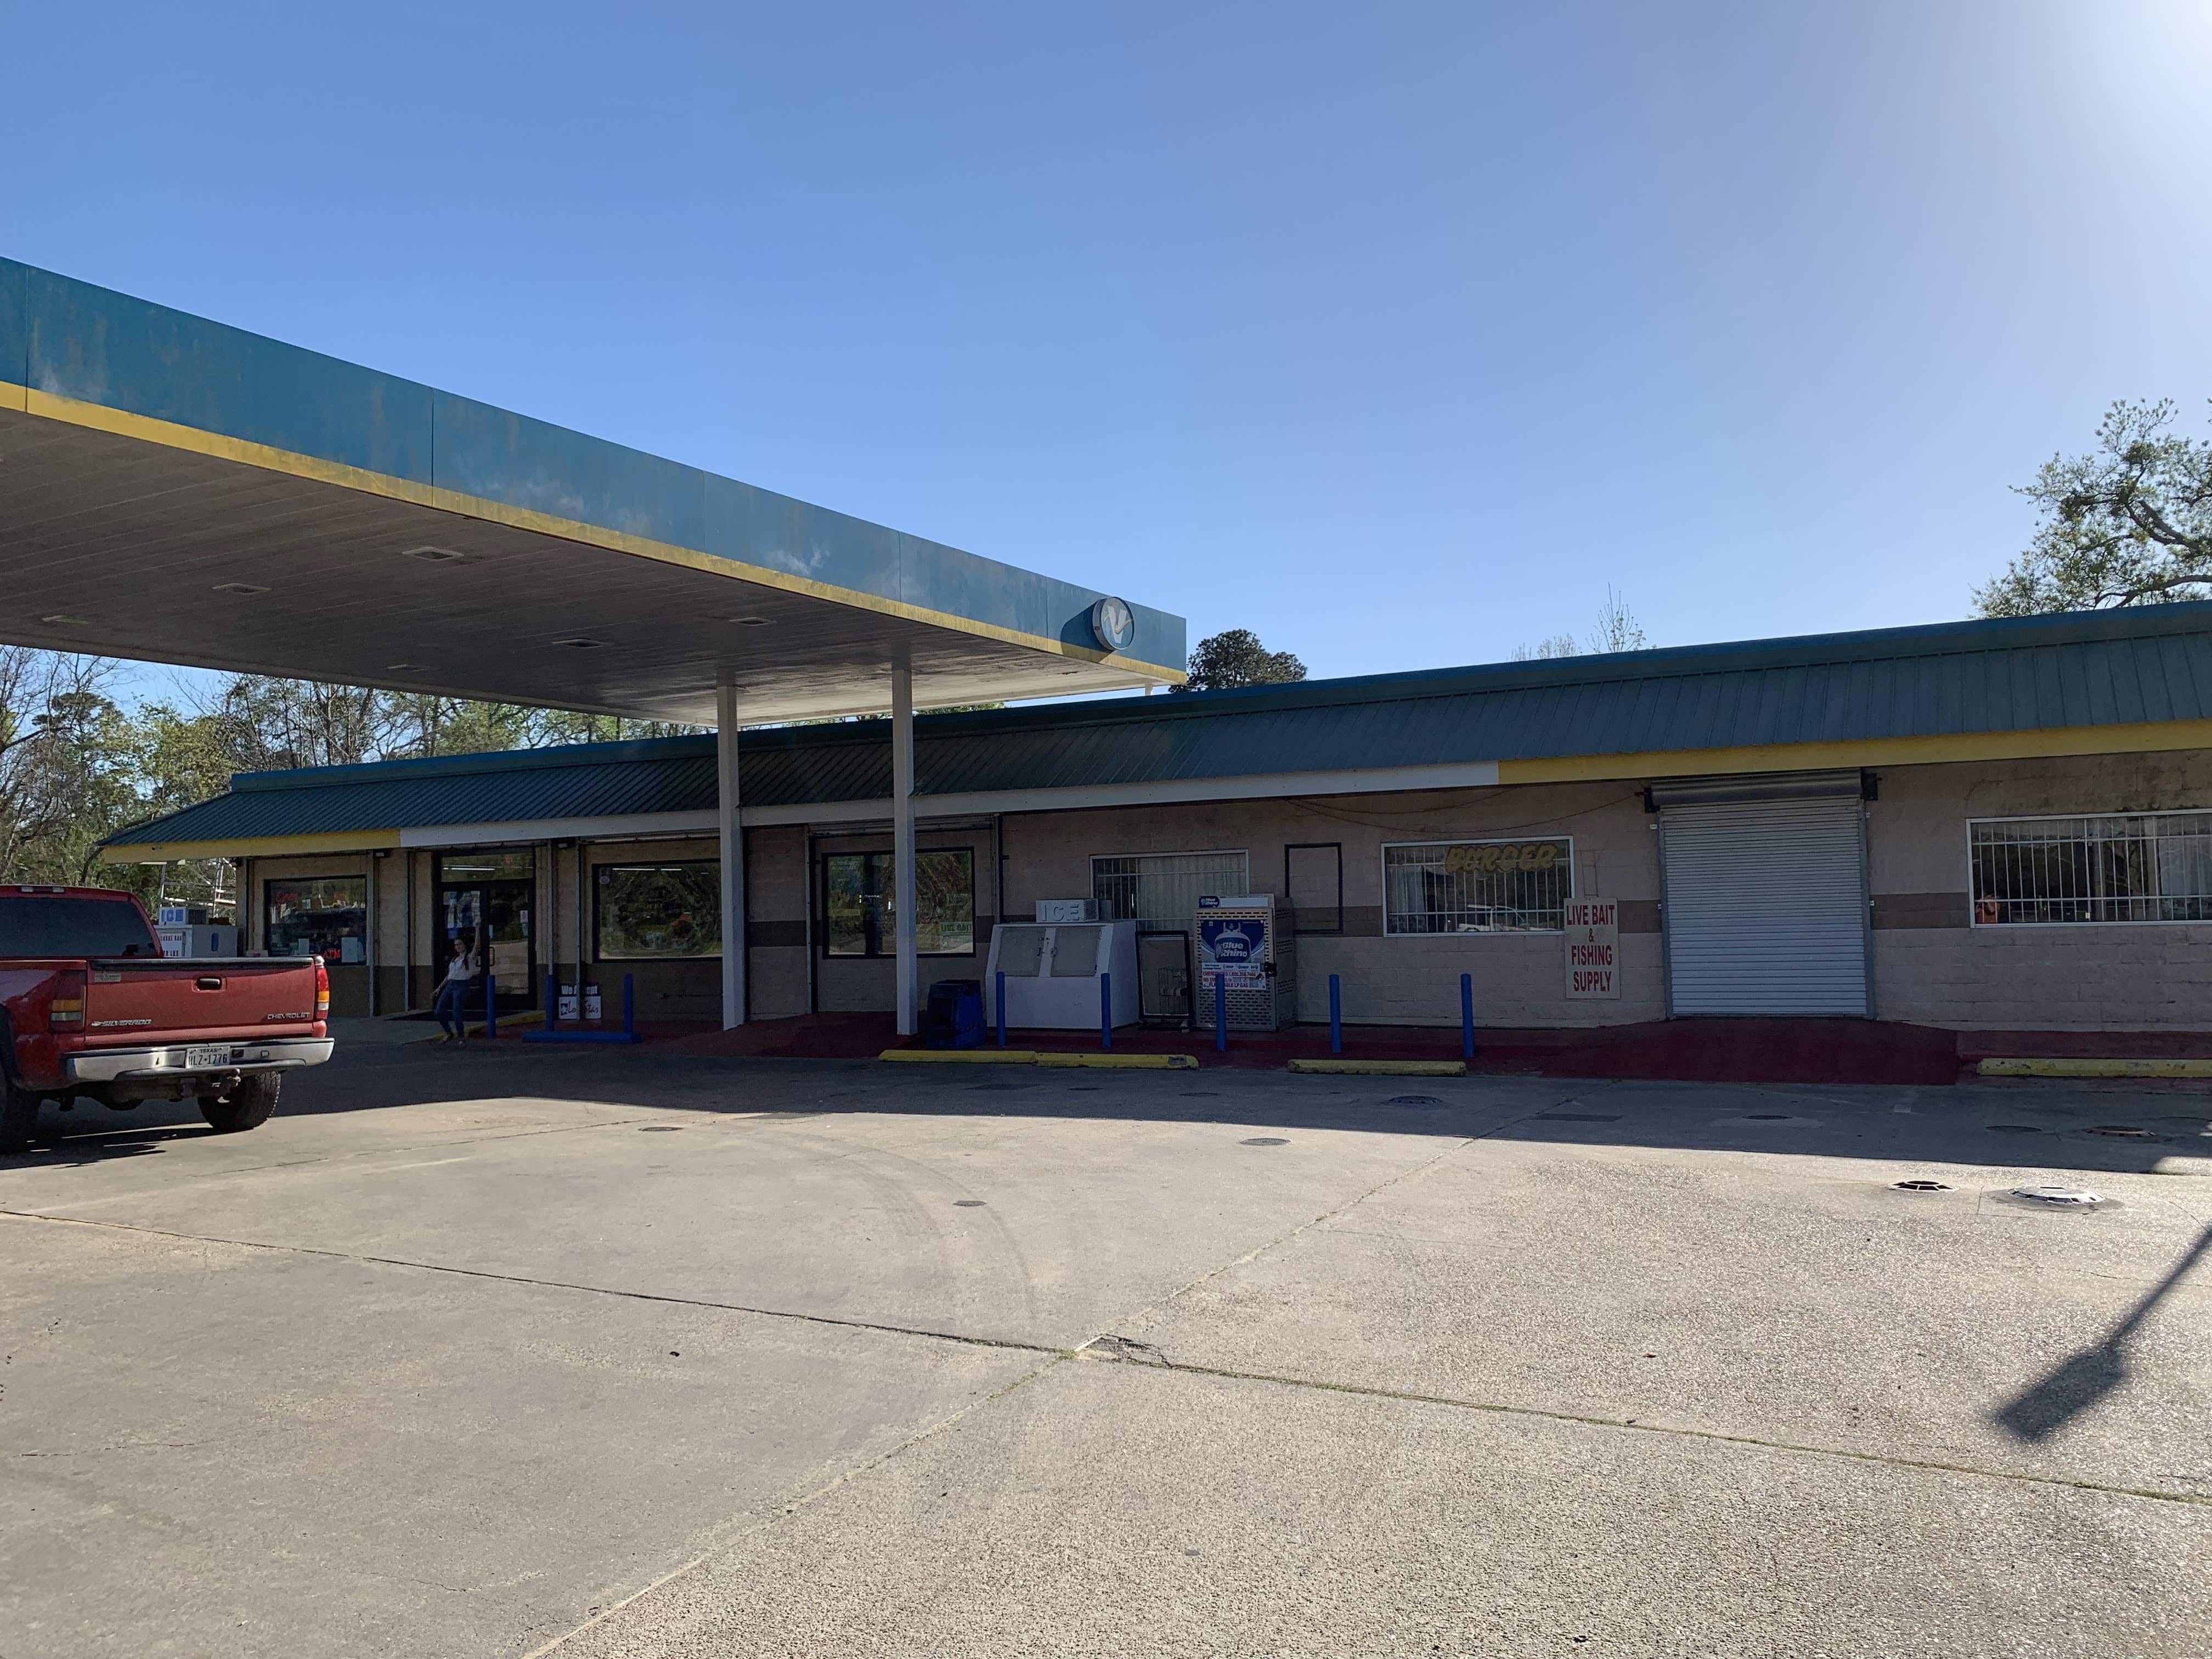 Valero - Coldspring (TX 77331), US, any gas station near me